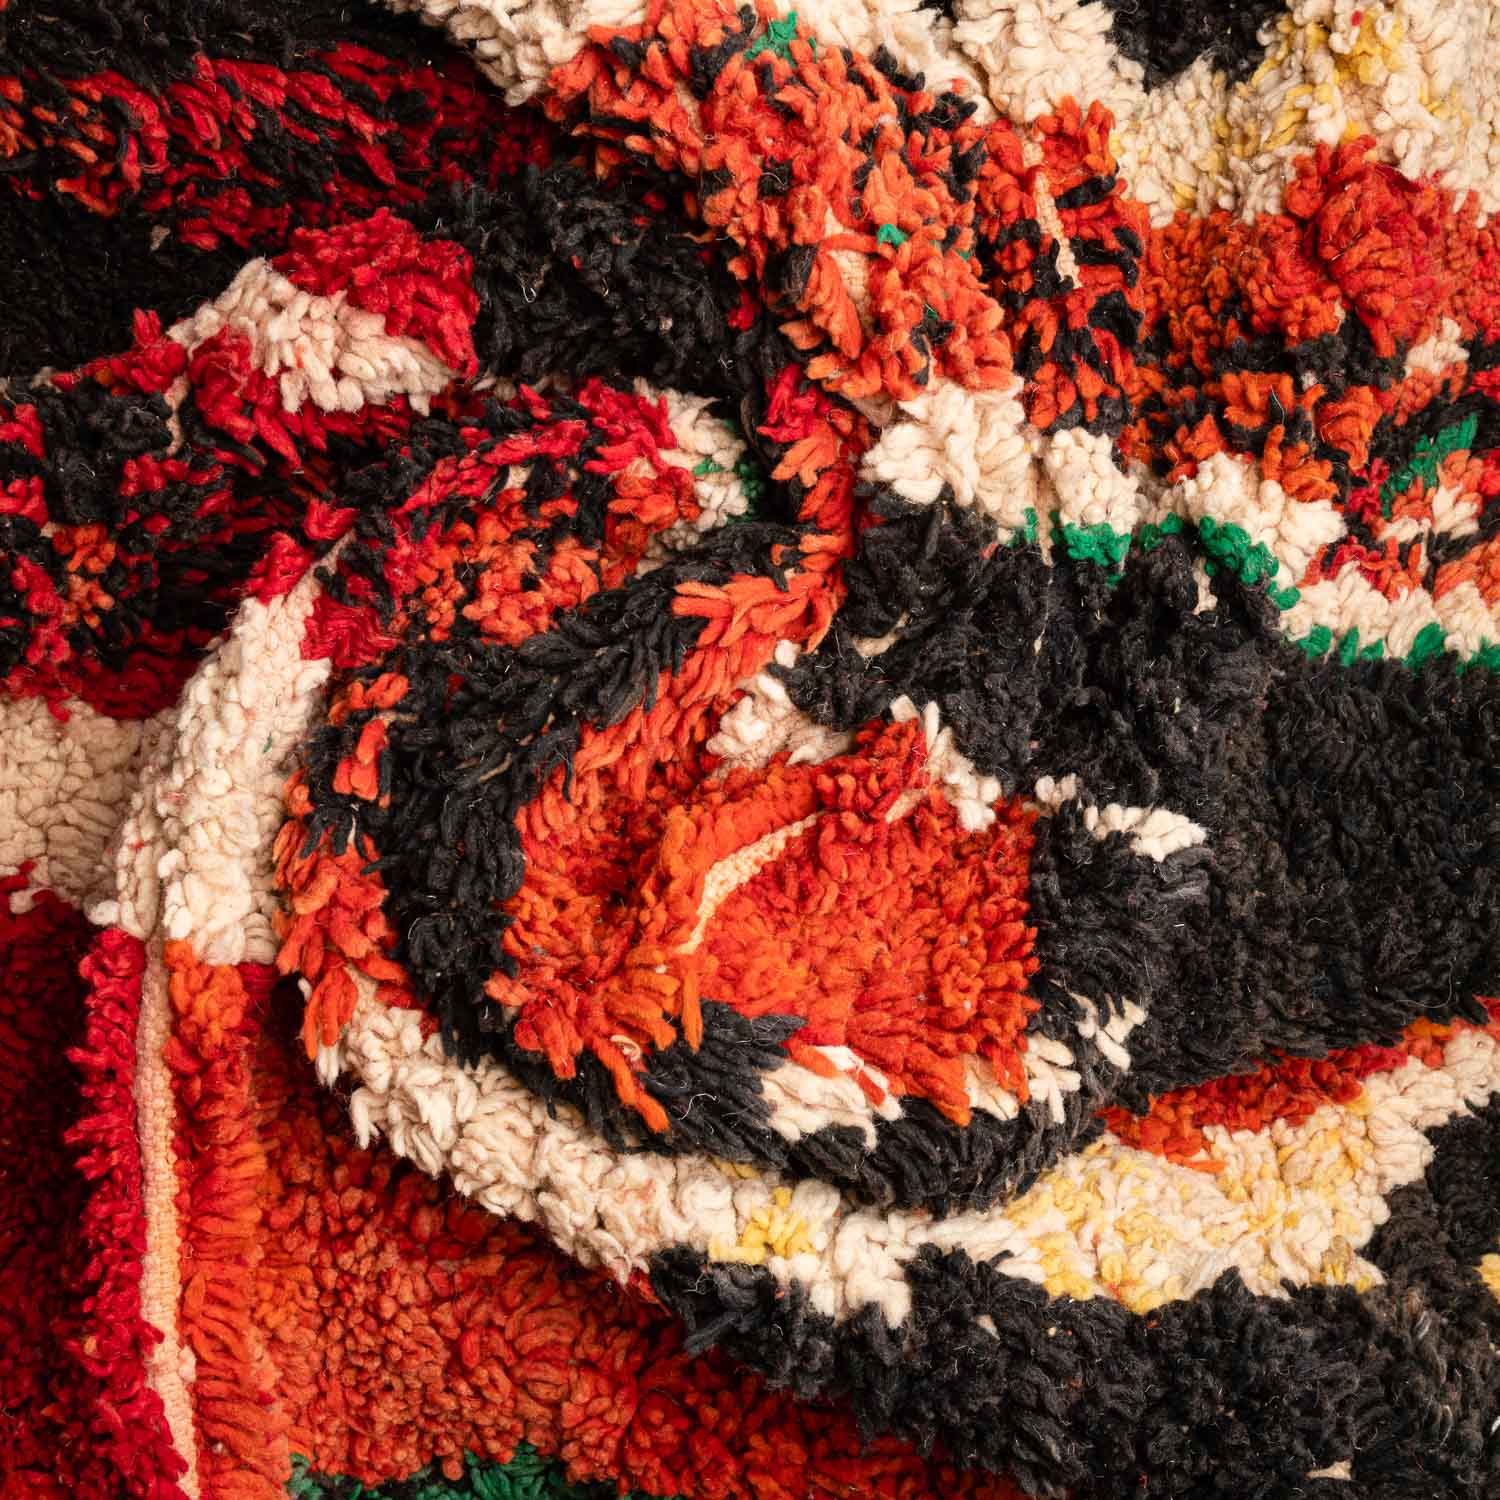 Rafidah - Vintage Moroccan rug